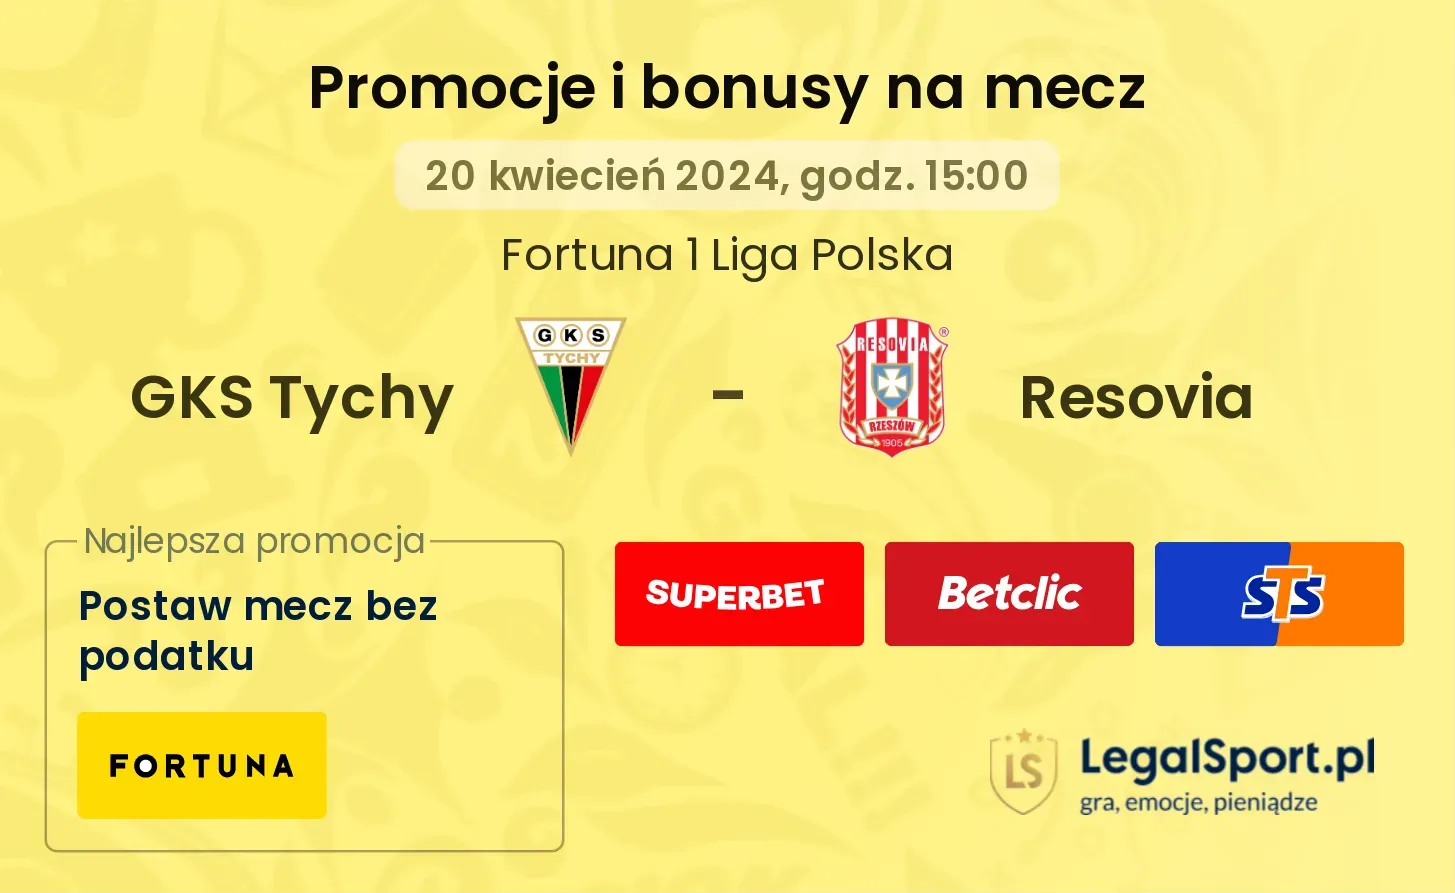 GKS Tychy - Resovia promocje bonusy na mecz